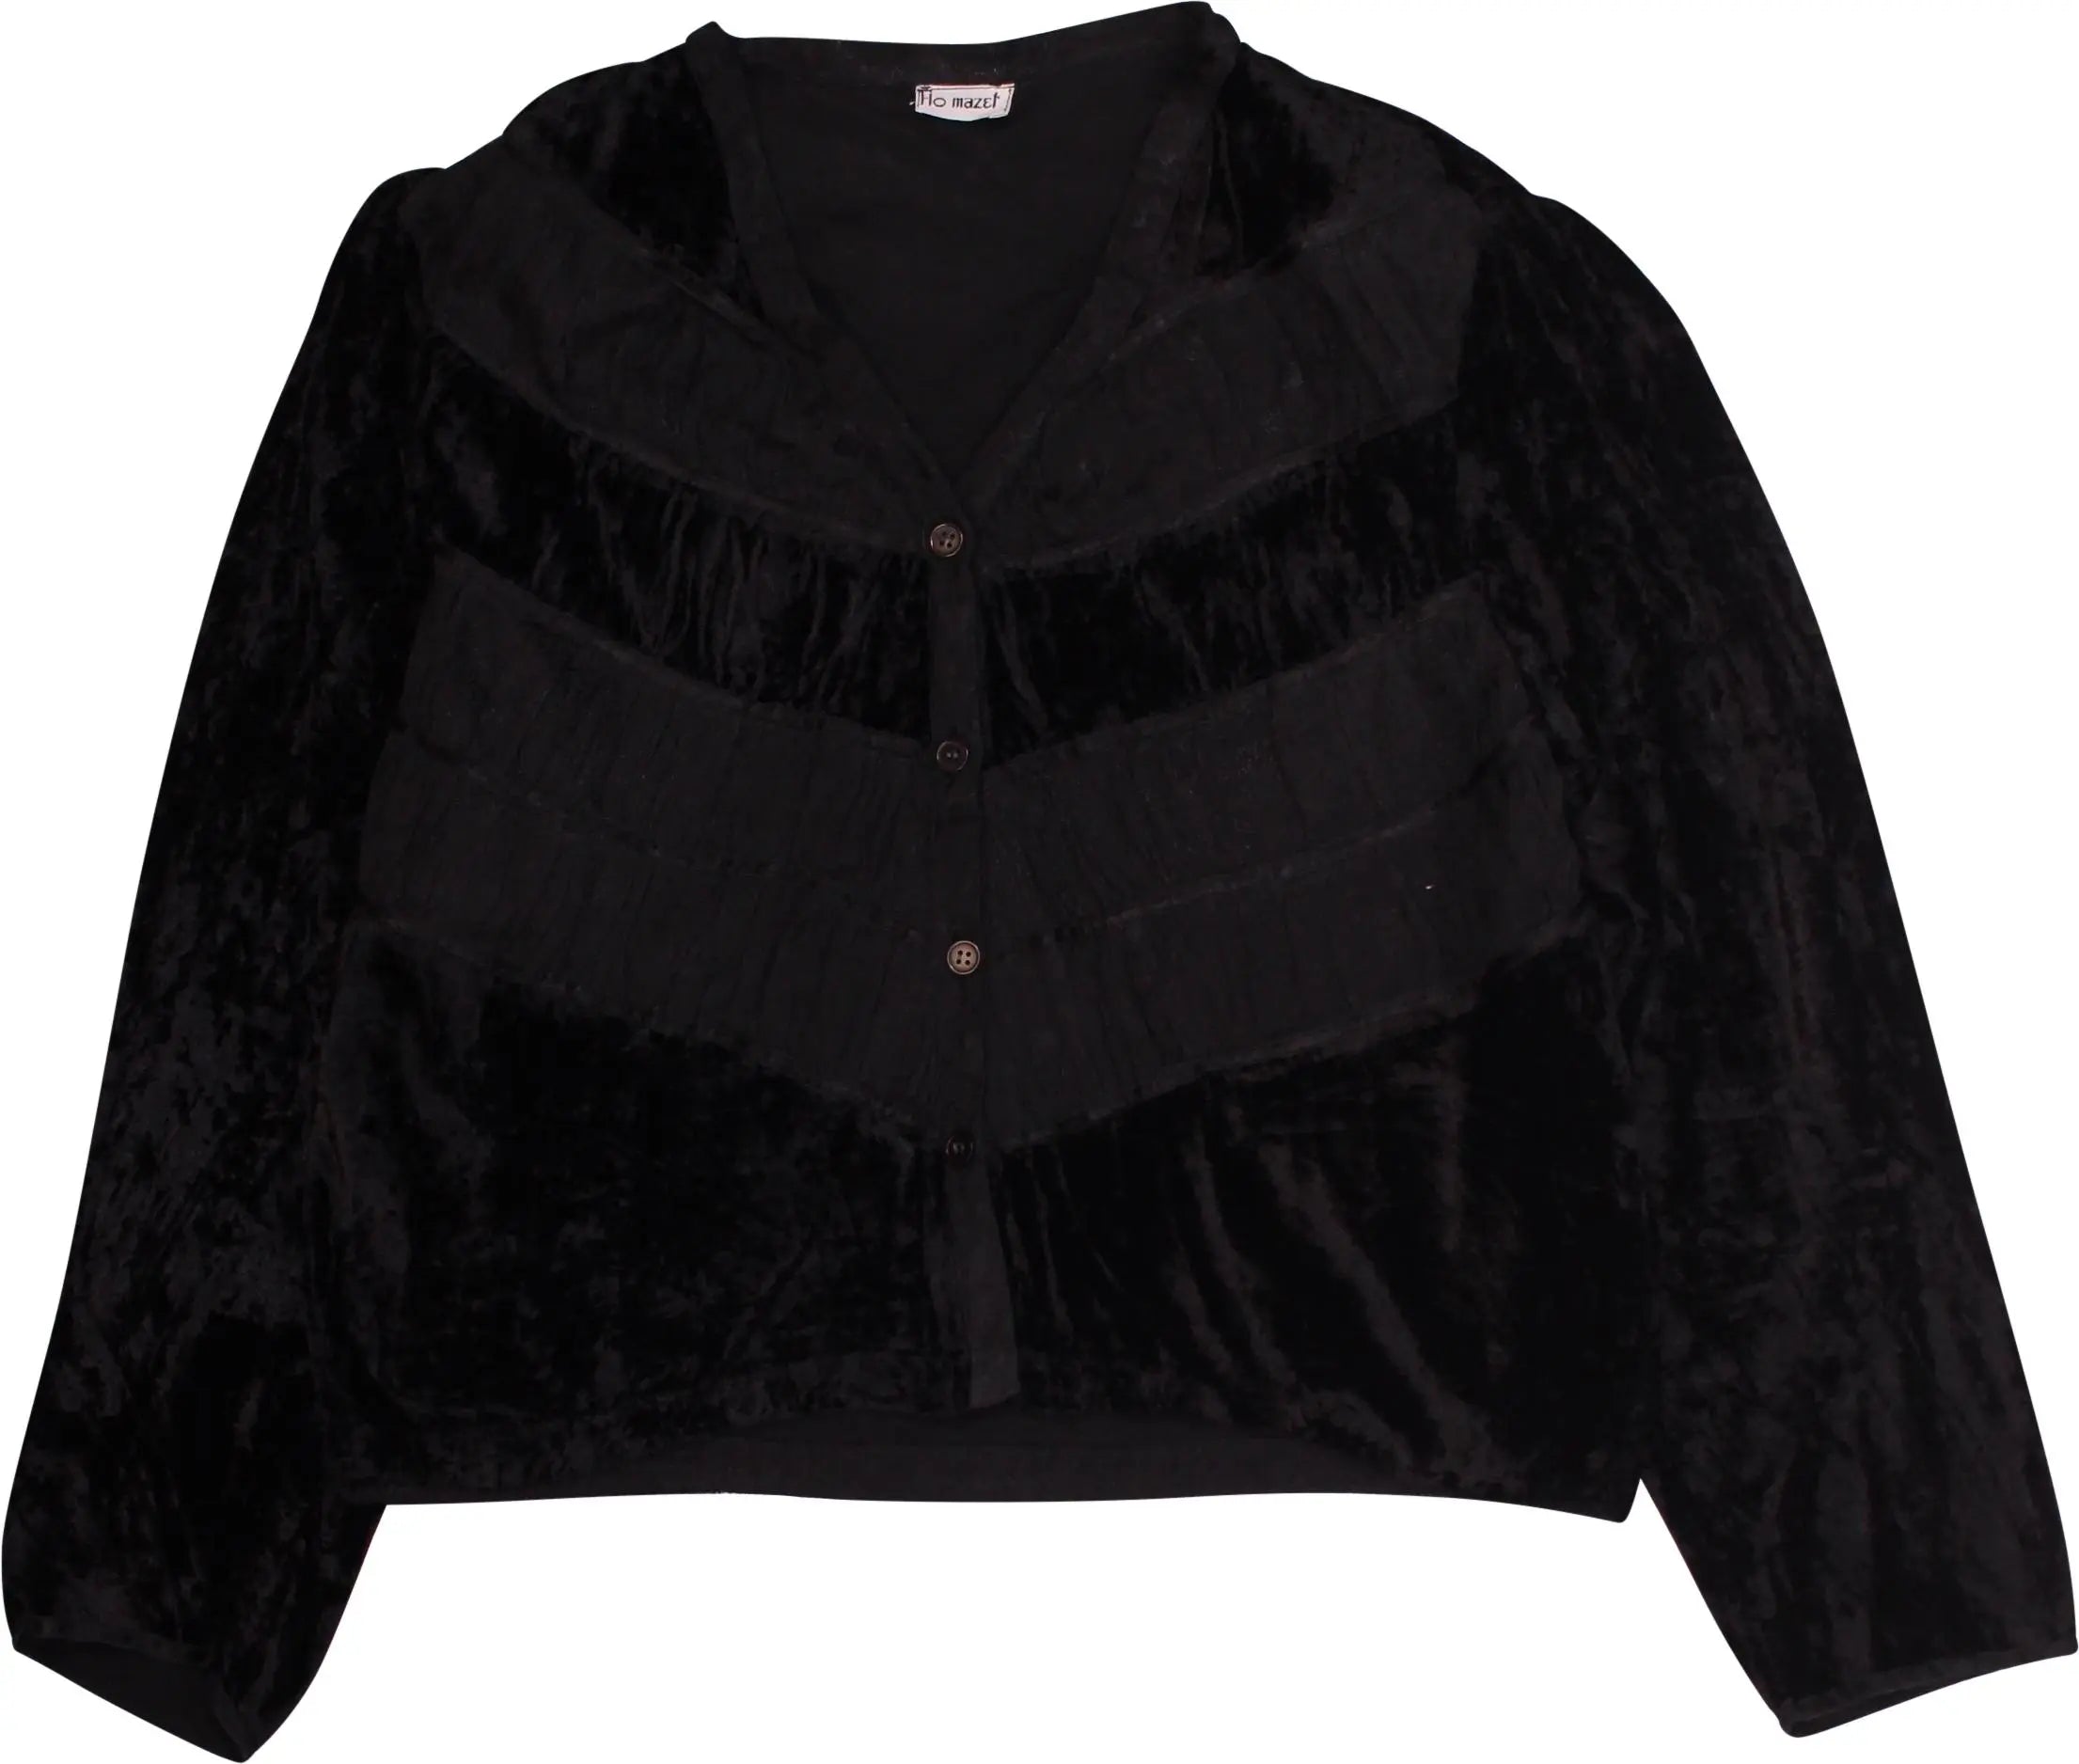 Flo Mazet - Black Velvet Blouse- ThriftTale.com - Vintage and second handclothing